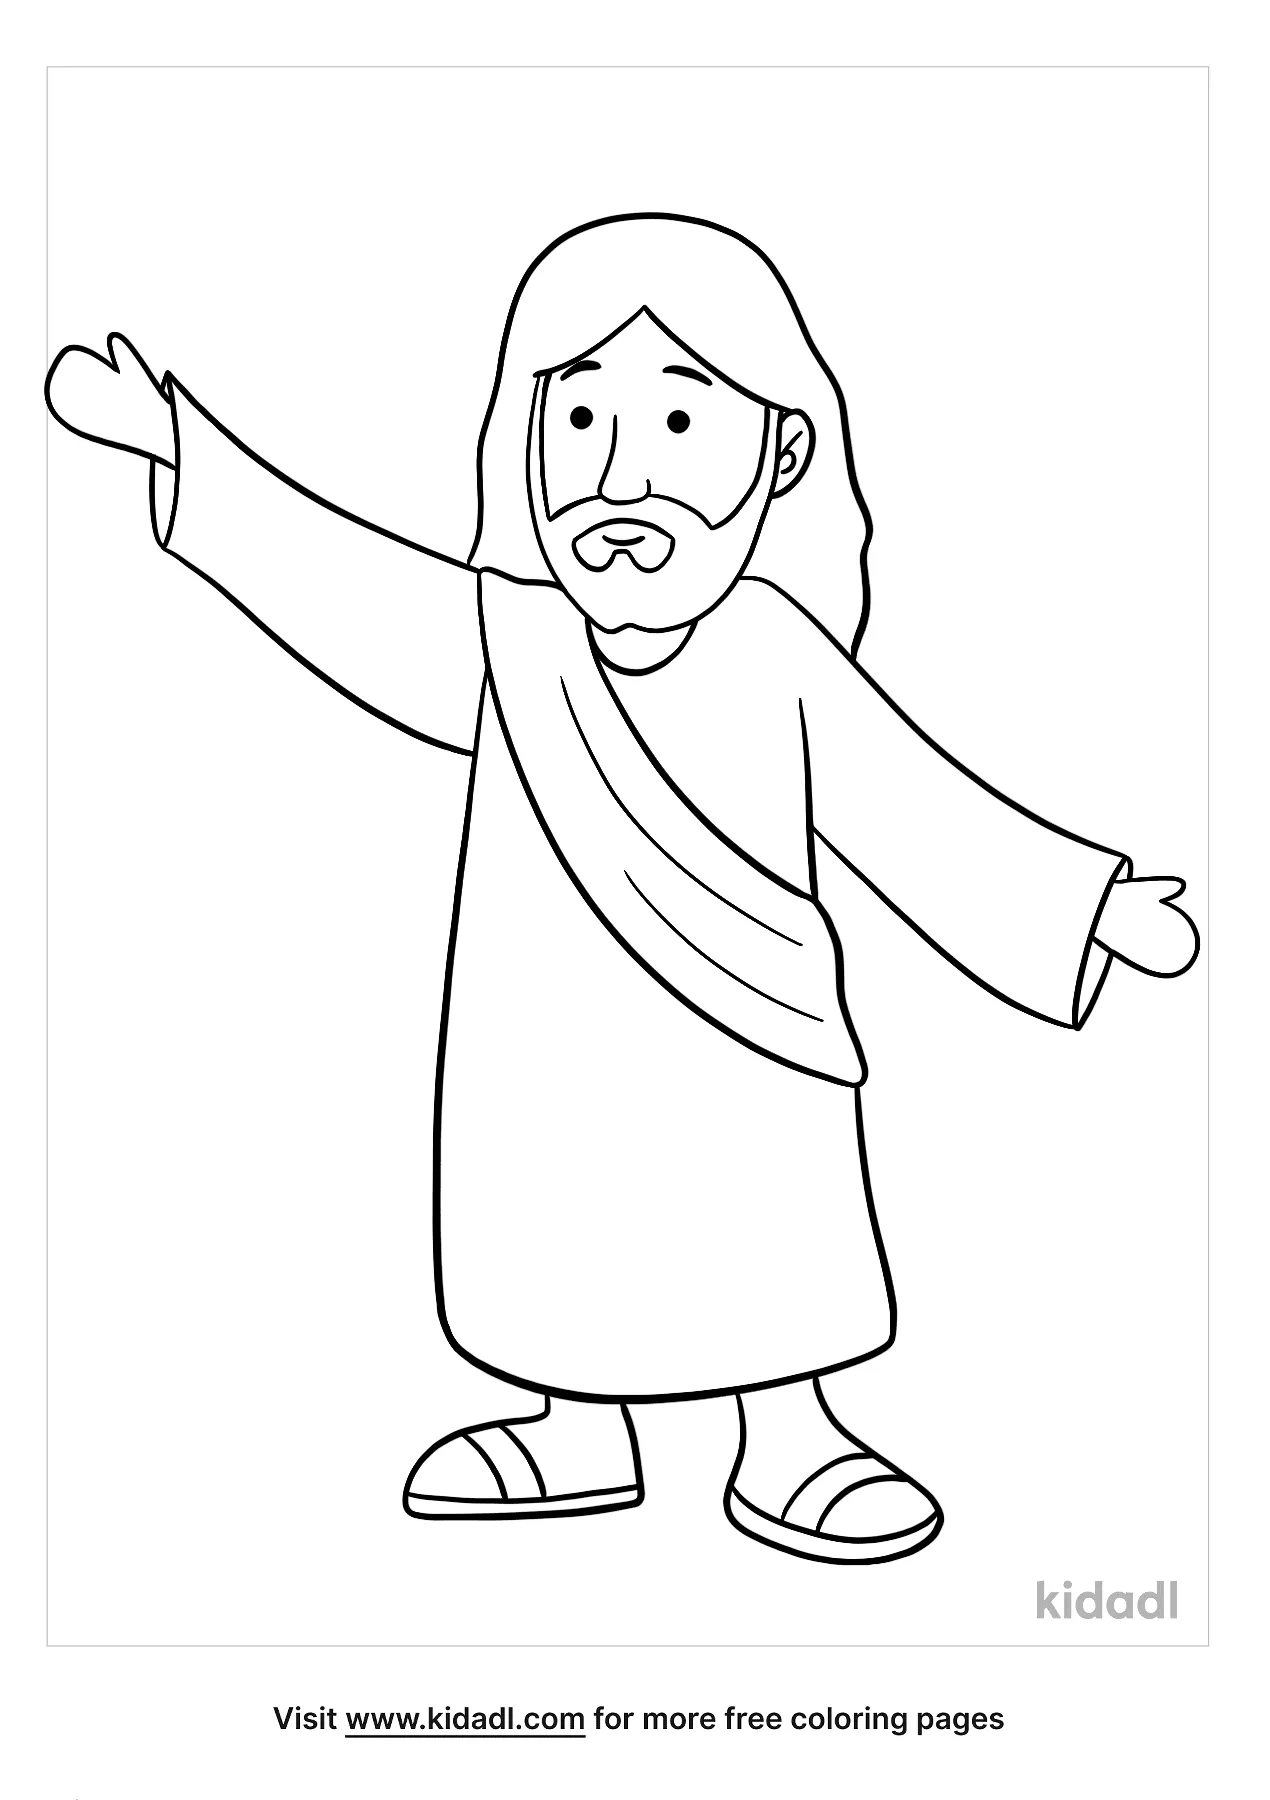 Free Jesus Cartoon Coloring Page | Coloring Page Printables | Kidadl